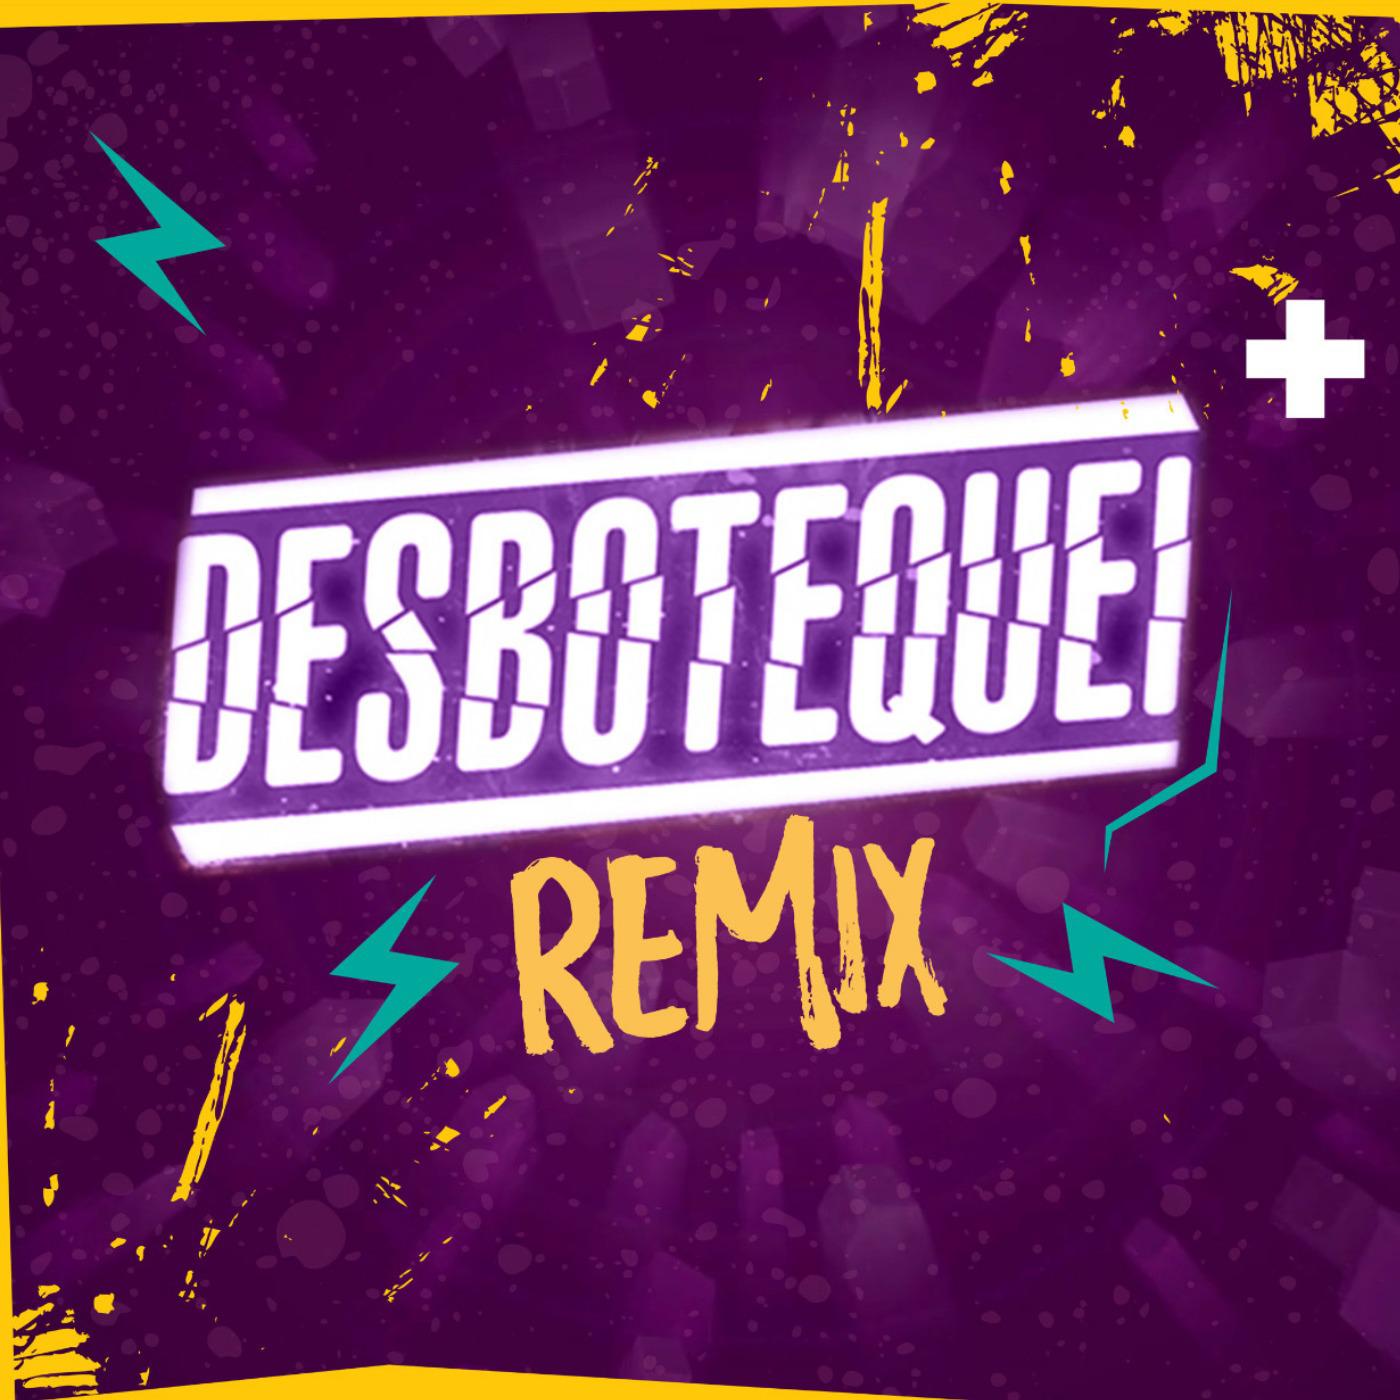 Desbotequei (Remix)